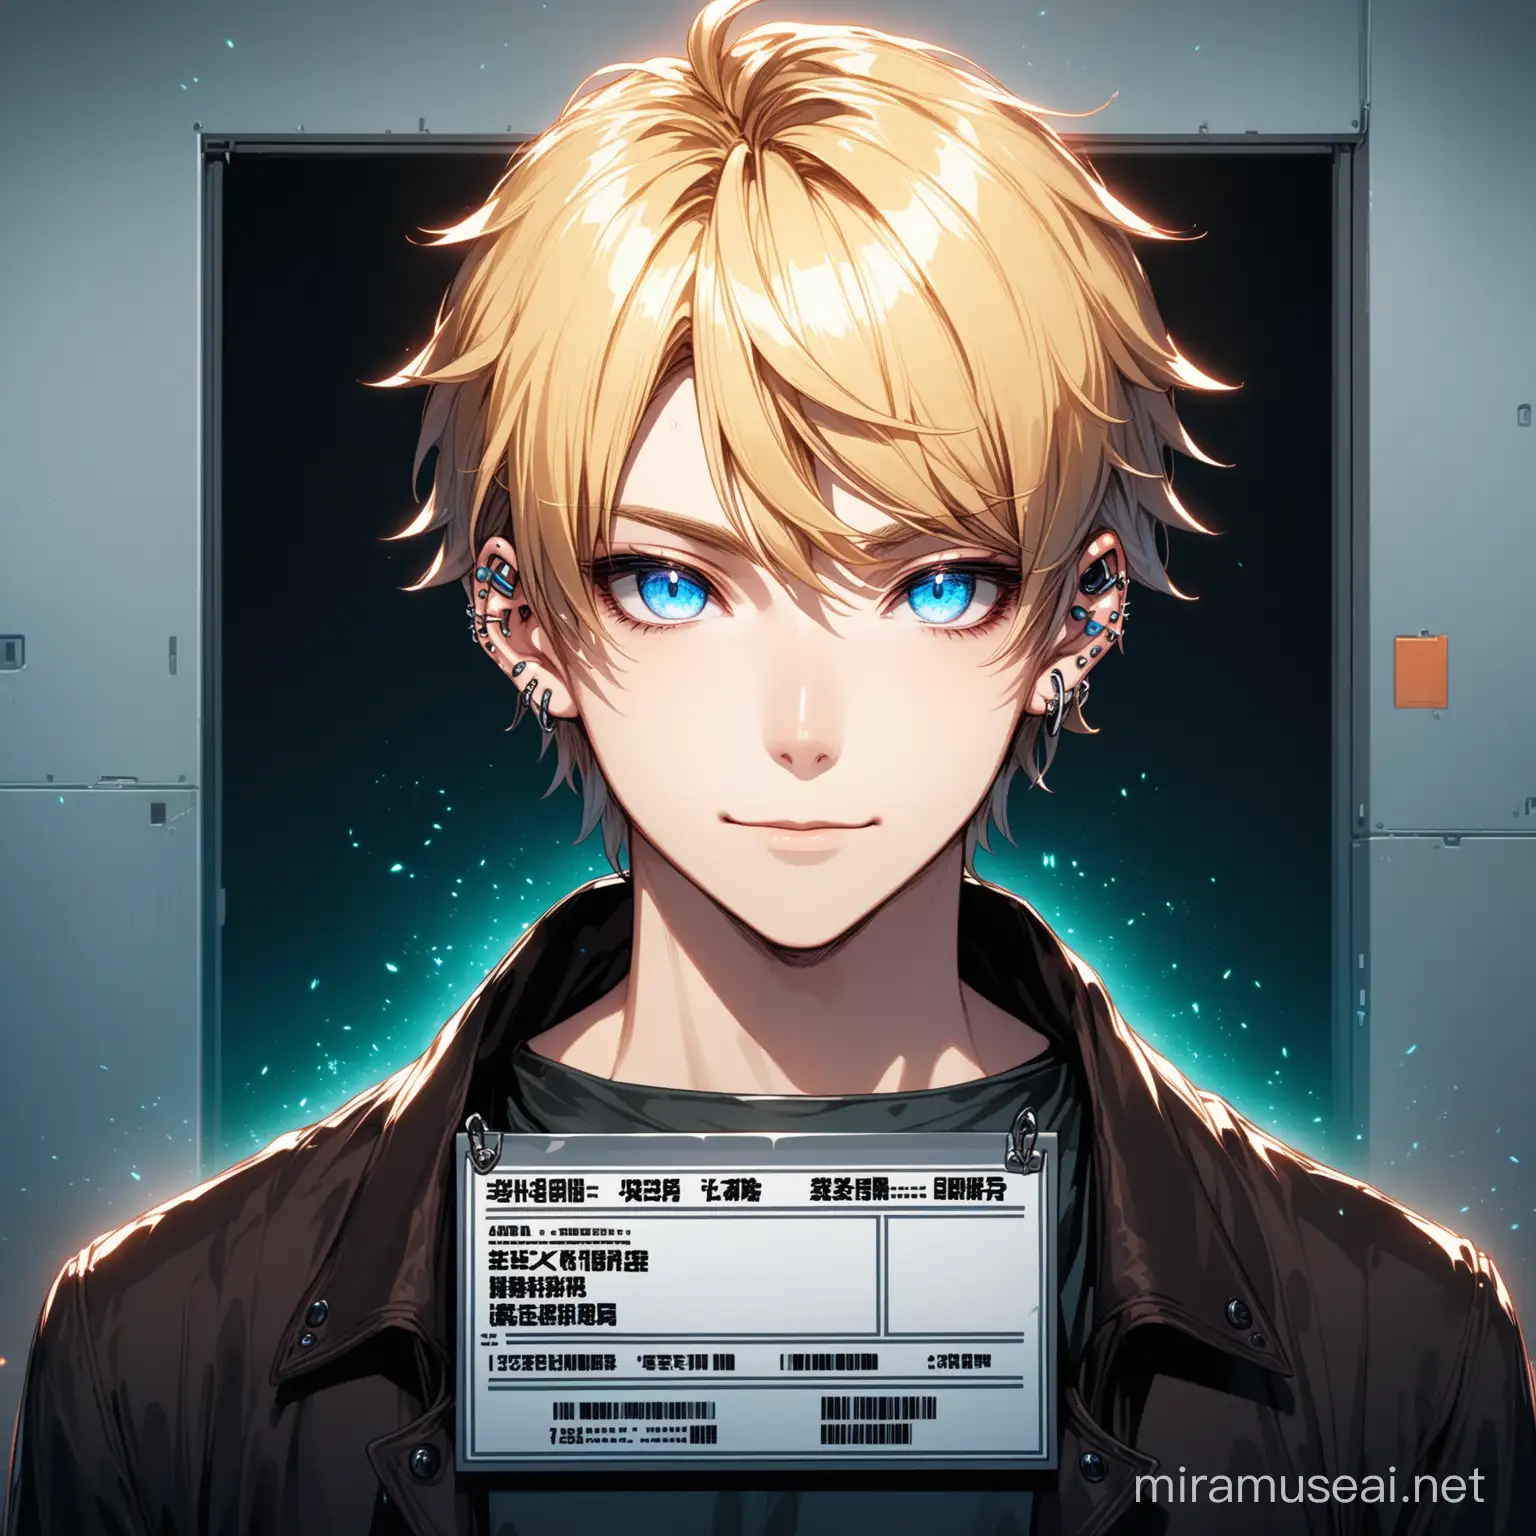 Ethereal Cyberpunk Portrait Smirking Blonde Male Model in Futuristic Anime Style